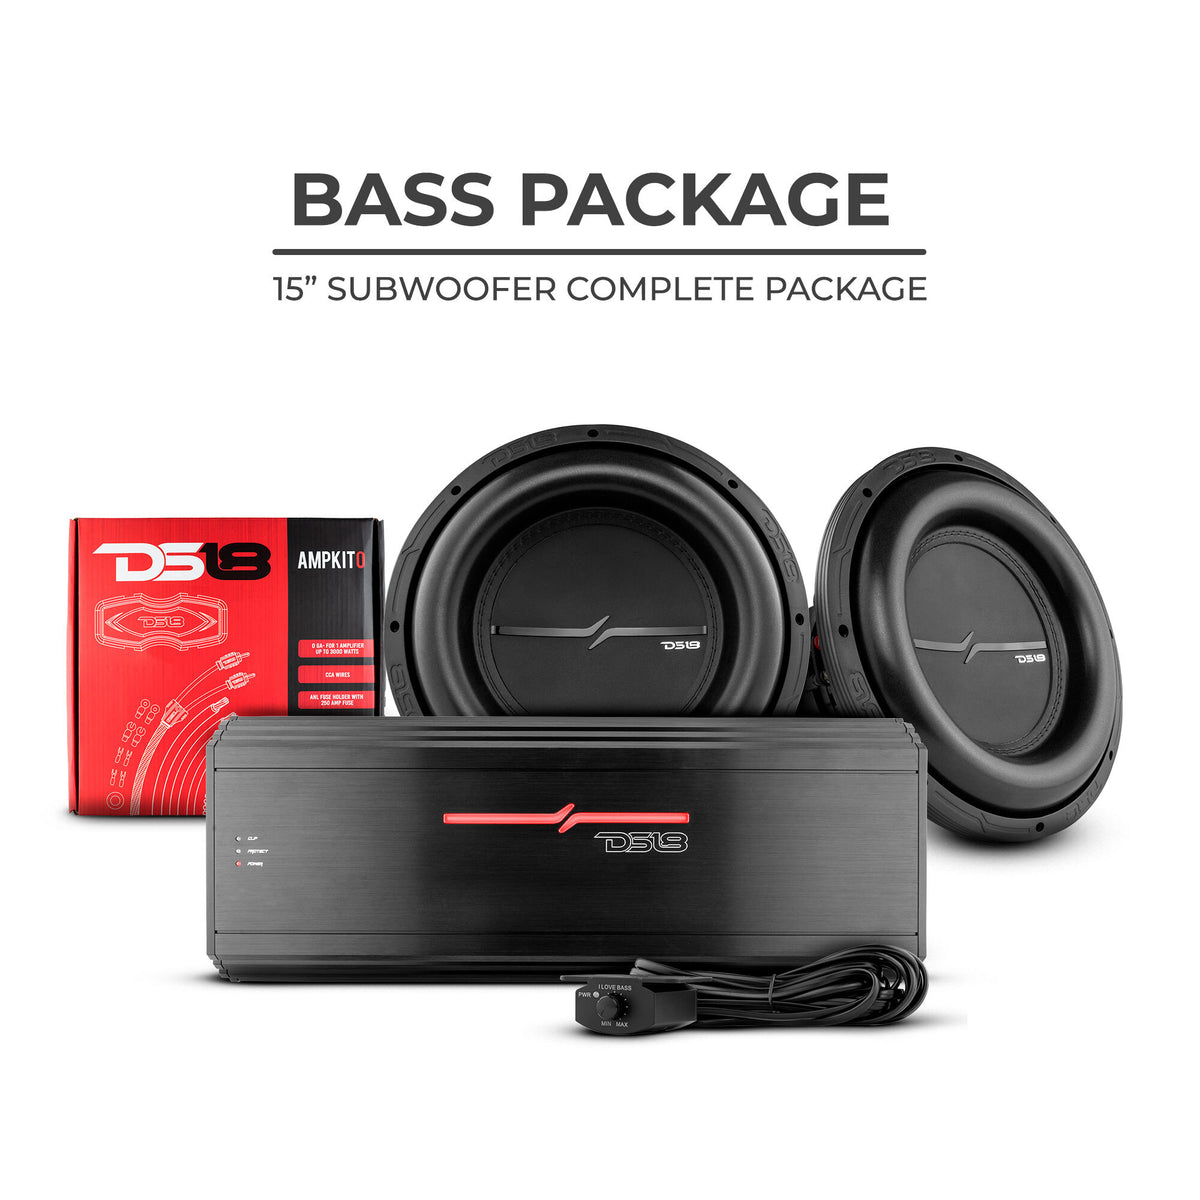 DS18 Better Bass Package - Upgrade your BASS